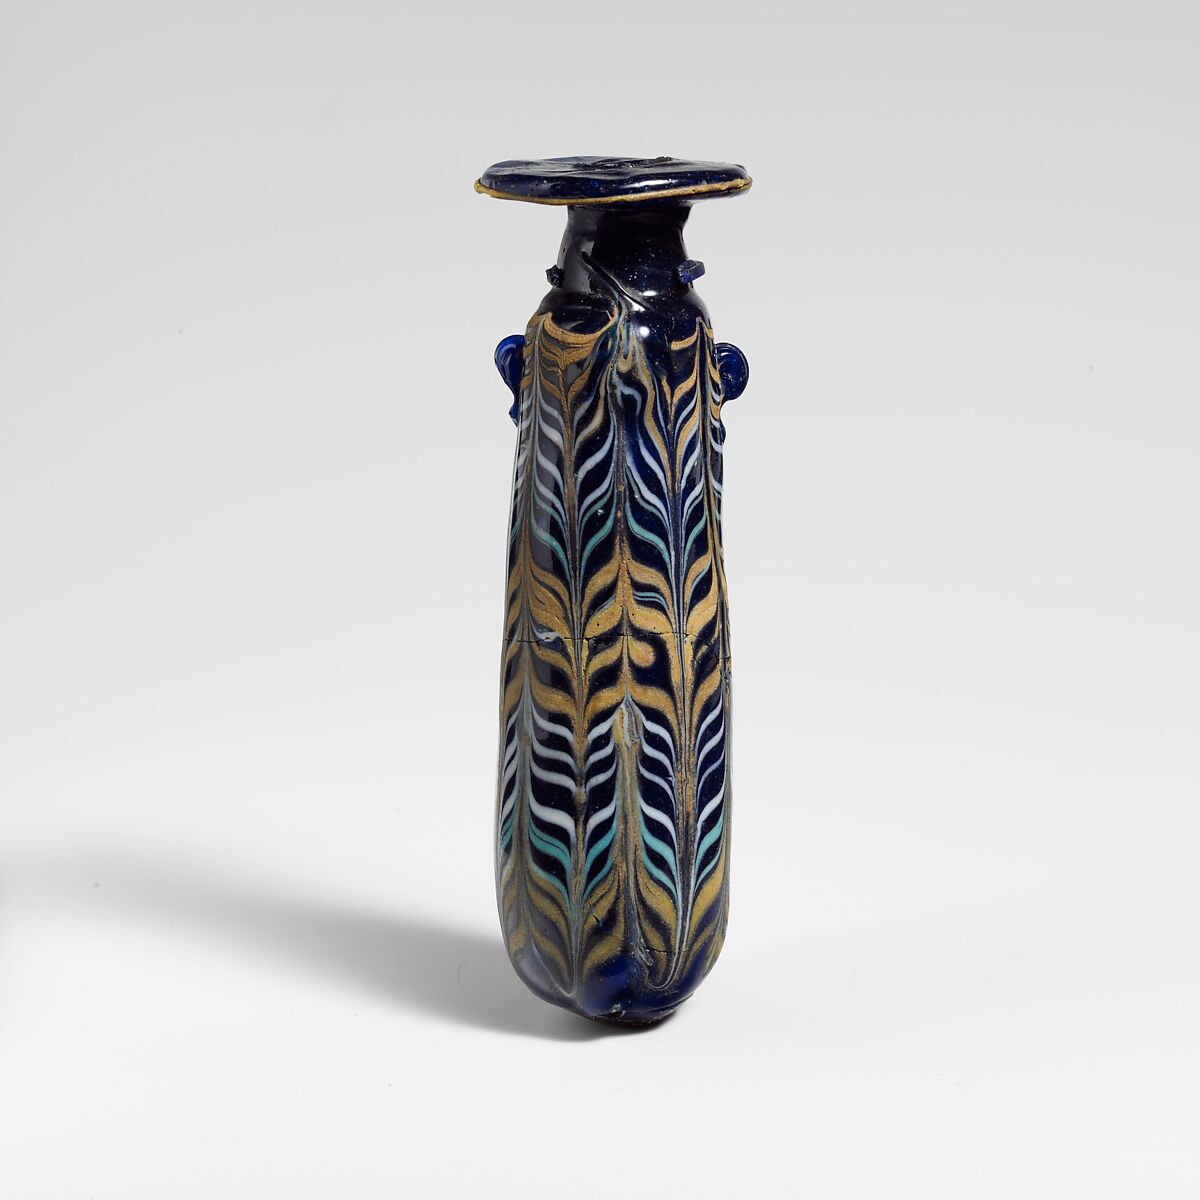 Glass alabastron (perfume bottle), Glass, Greek, Eastern Mediterranean or Italian 